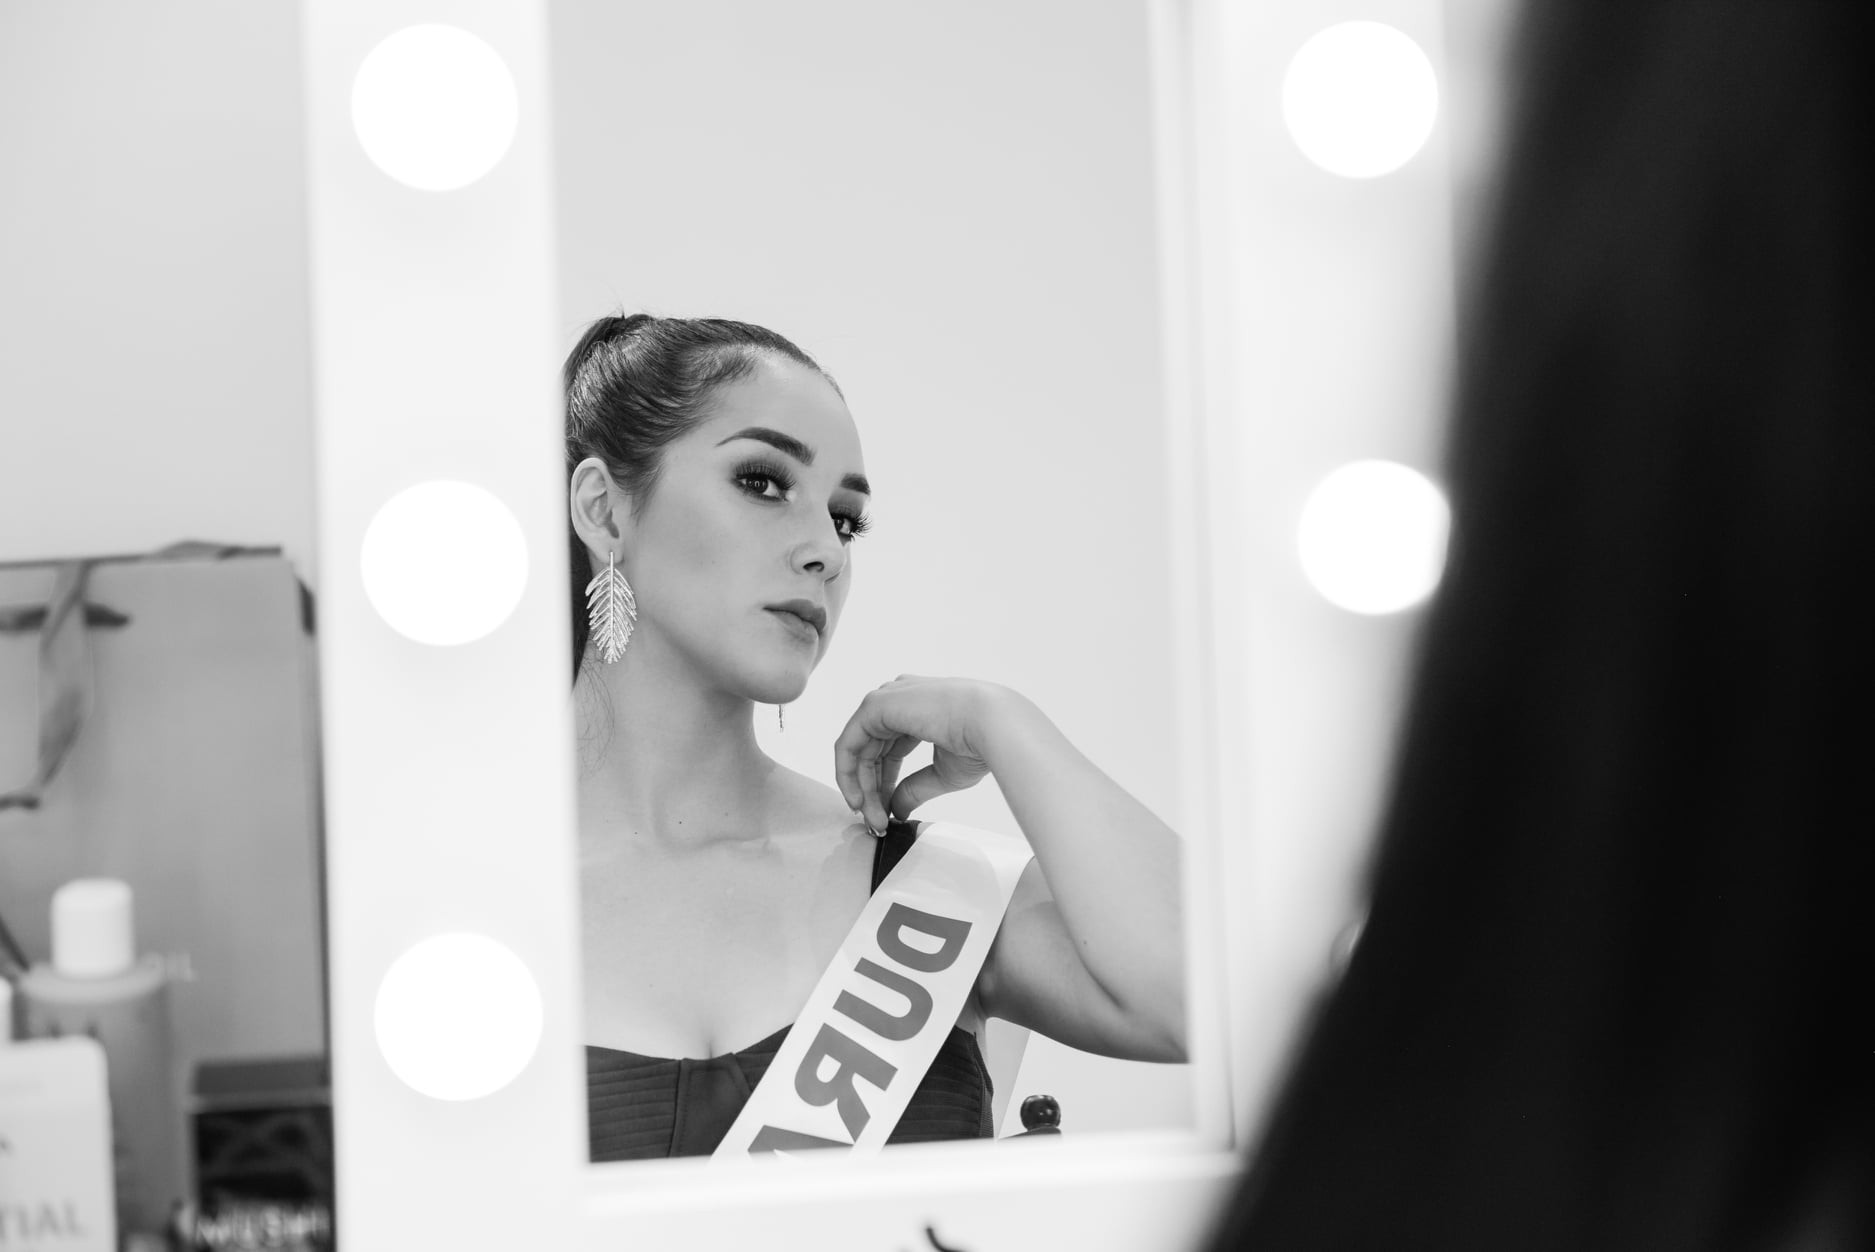 MissMexicoOrg - candidatas a miss mexico 2021, final: 1 july. - Página 37 OFj93P